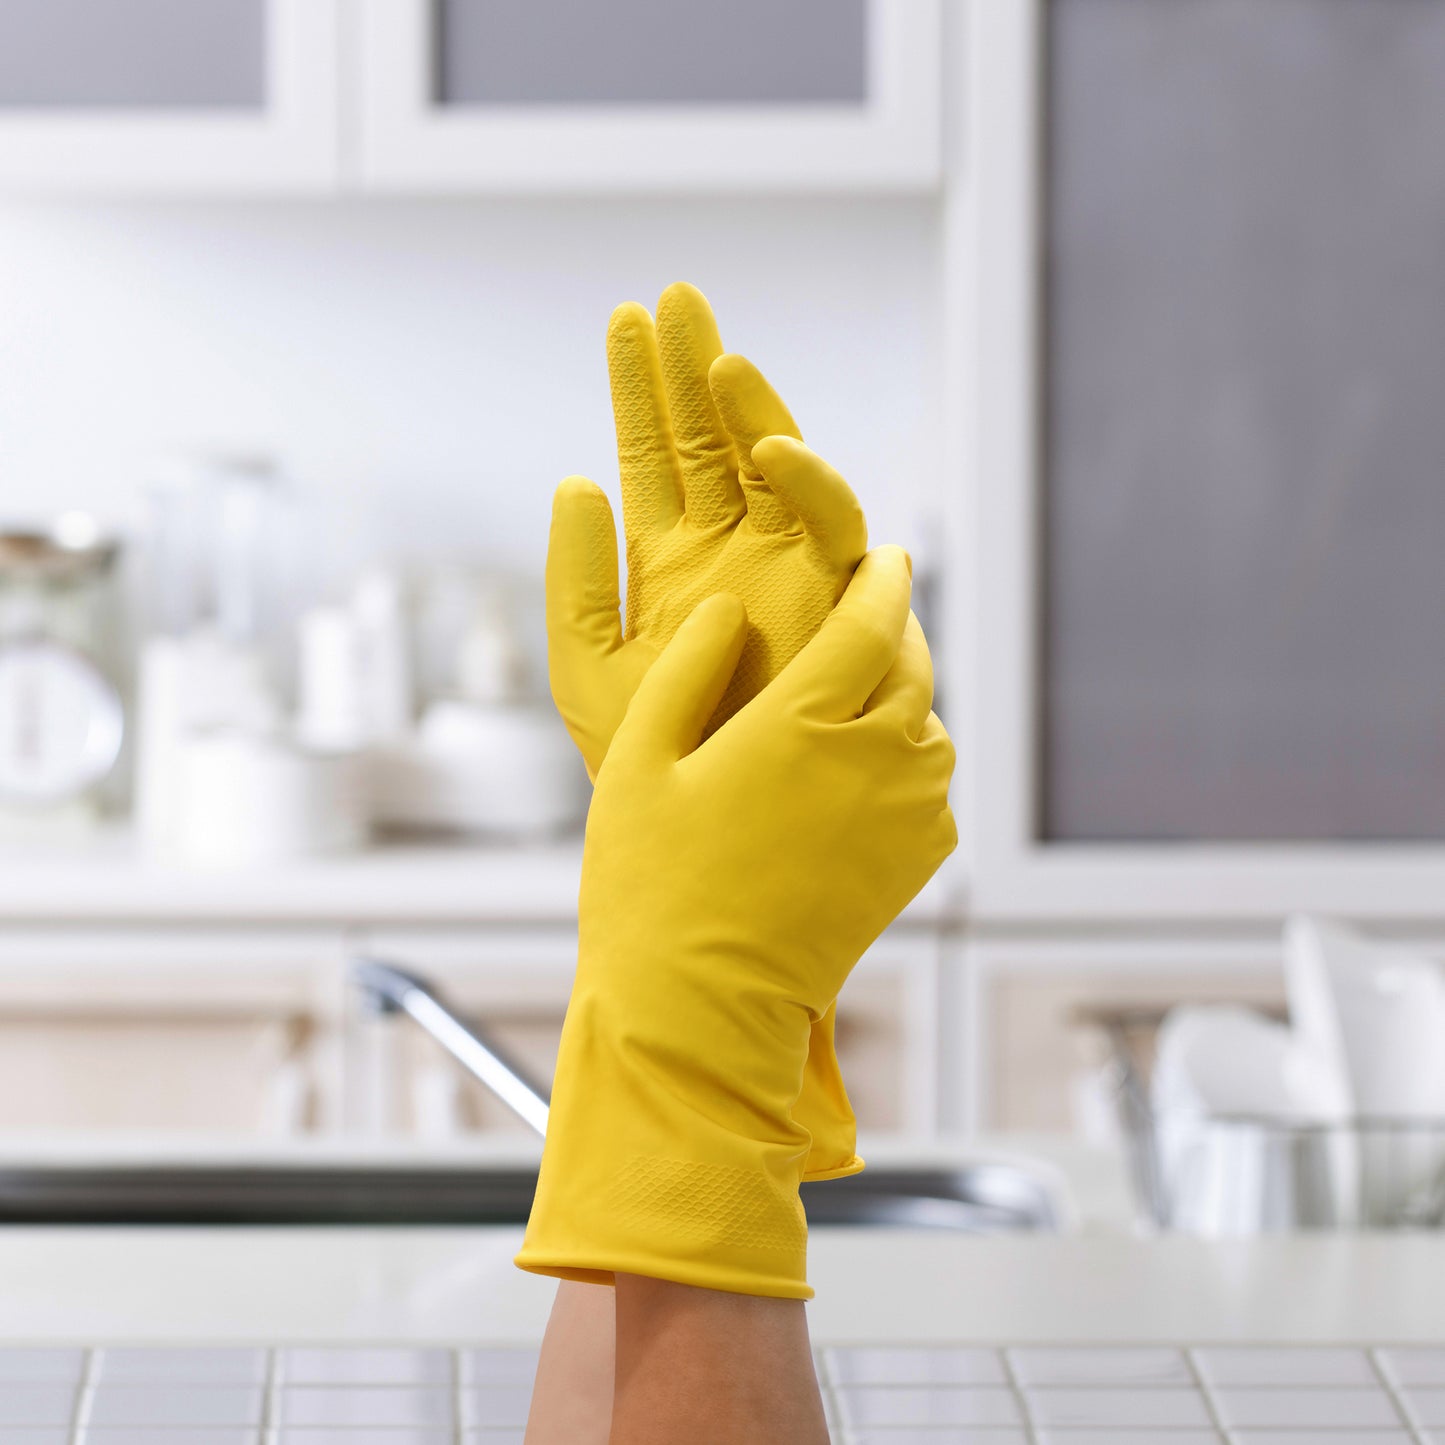 Kitchen Gloves AFG 1 PAR | Guantes para cocina